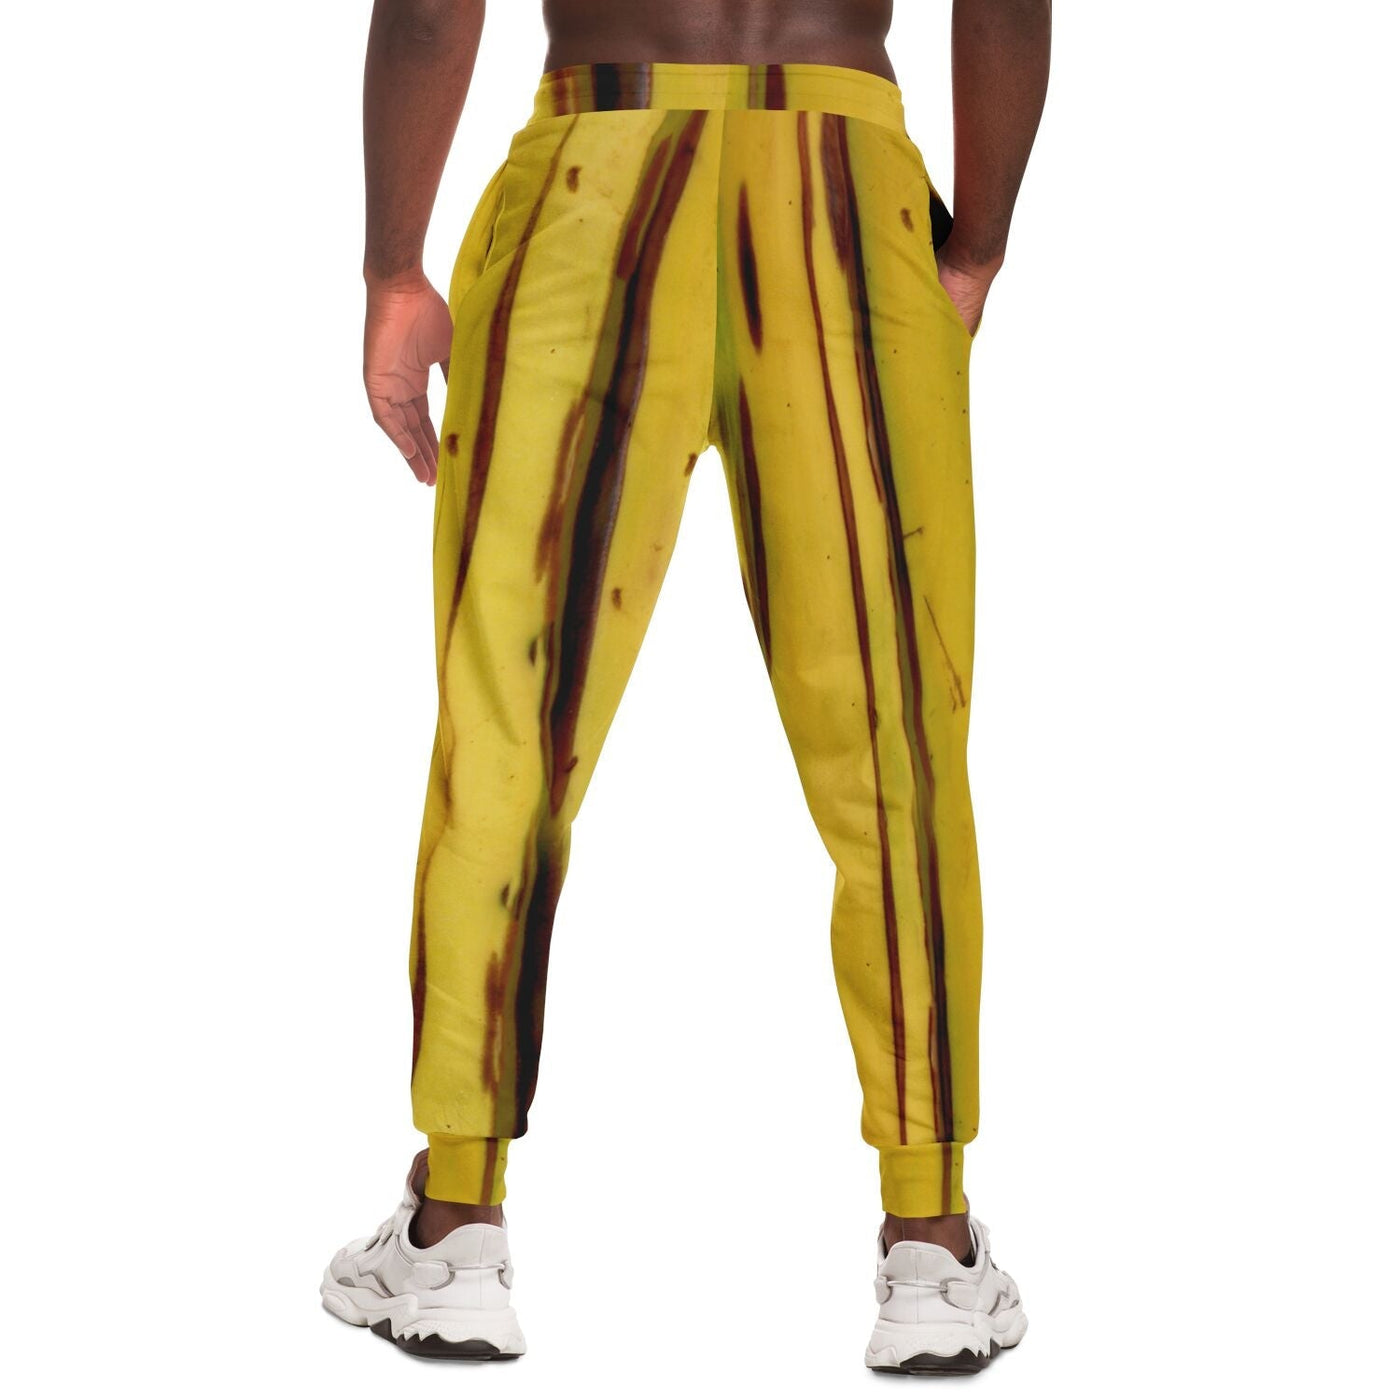 I'm Banana - Banana Peel Pattern Fashion Joggers